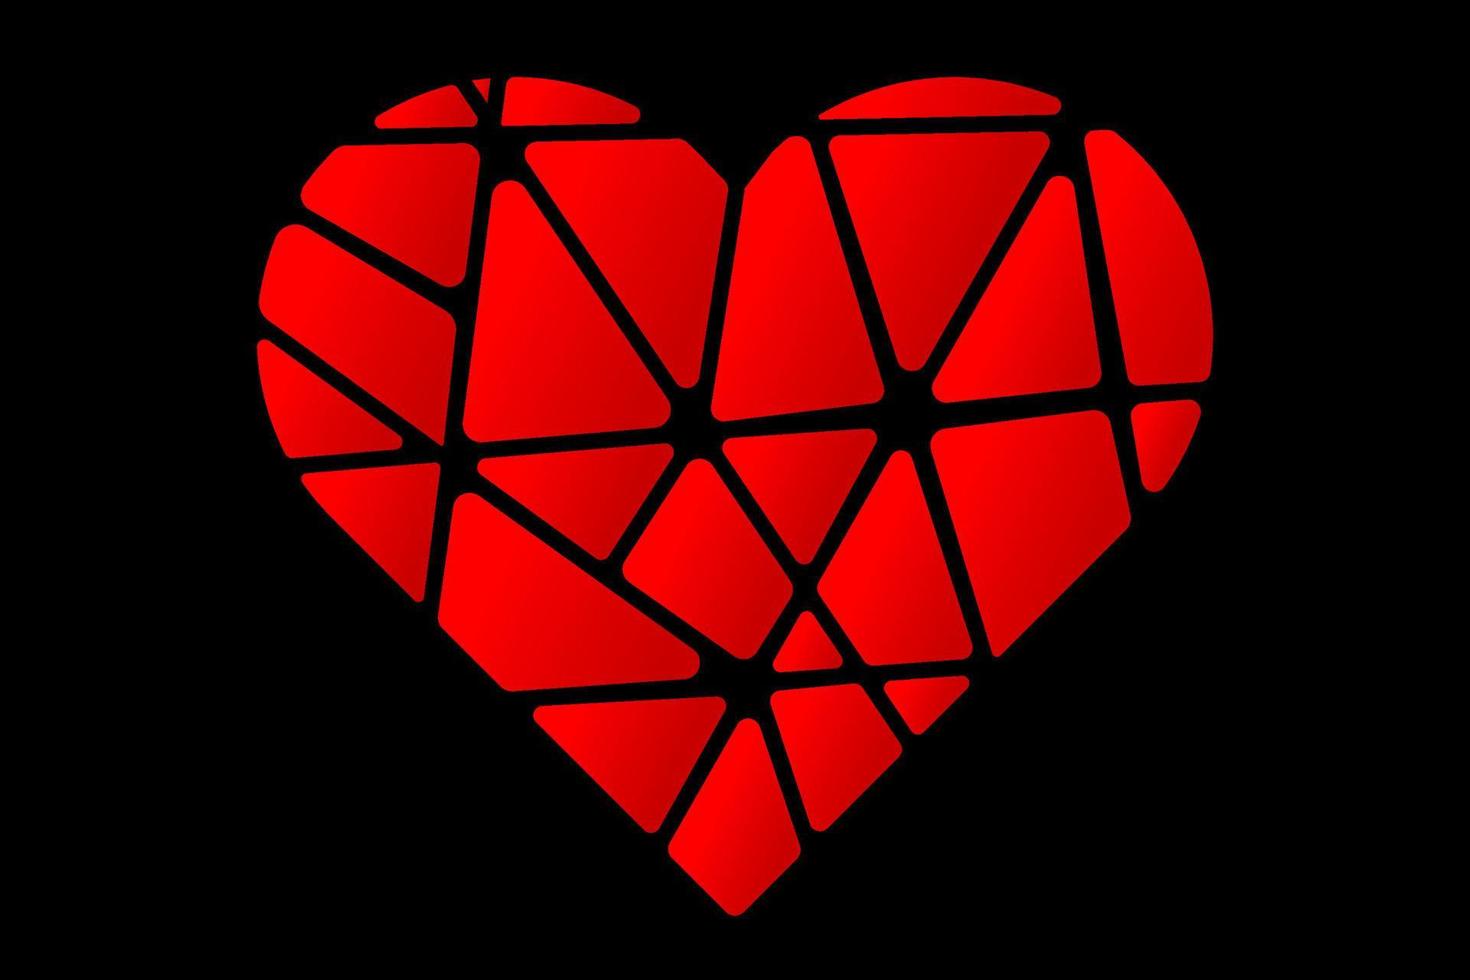 corazón roto separado. corazón agrietado rojo aislado sobre fondo negro. vector